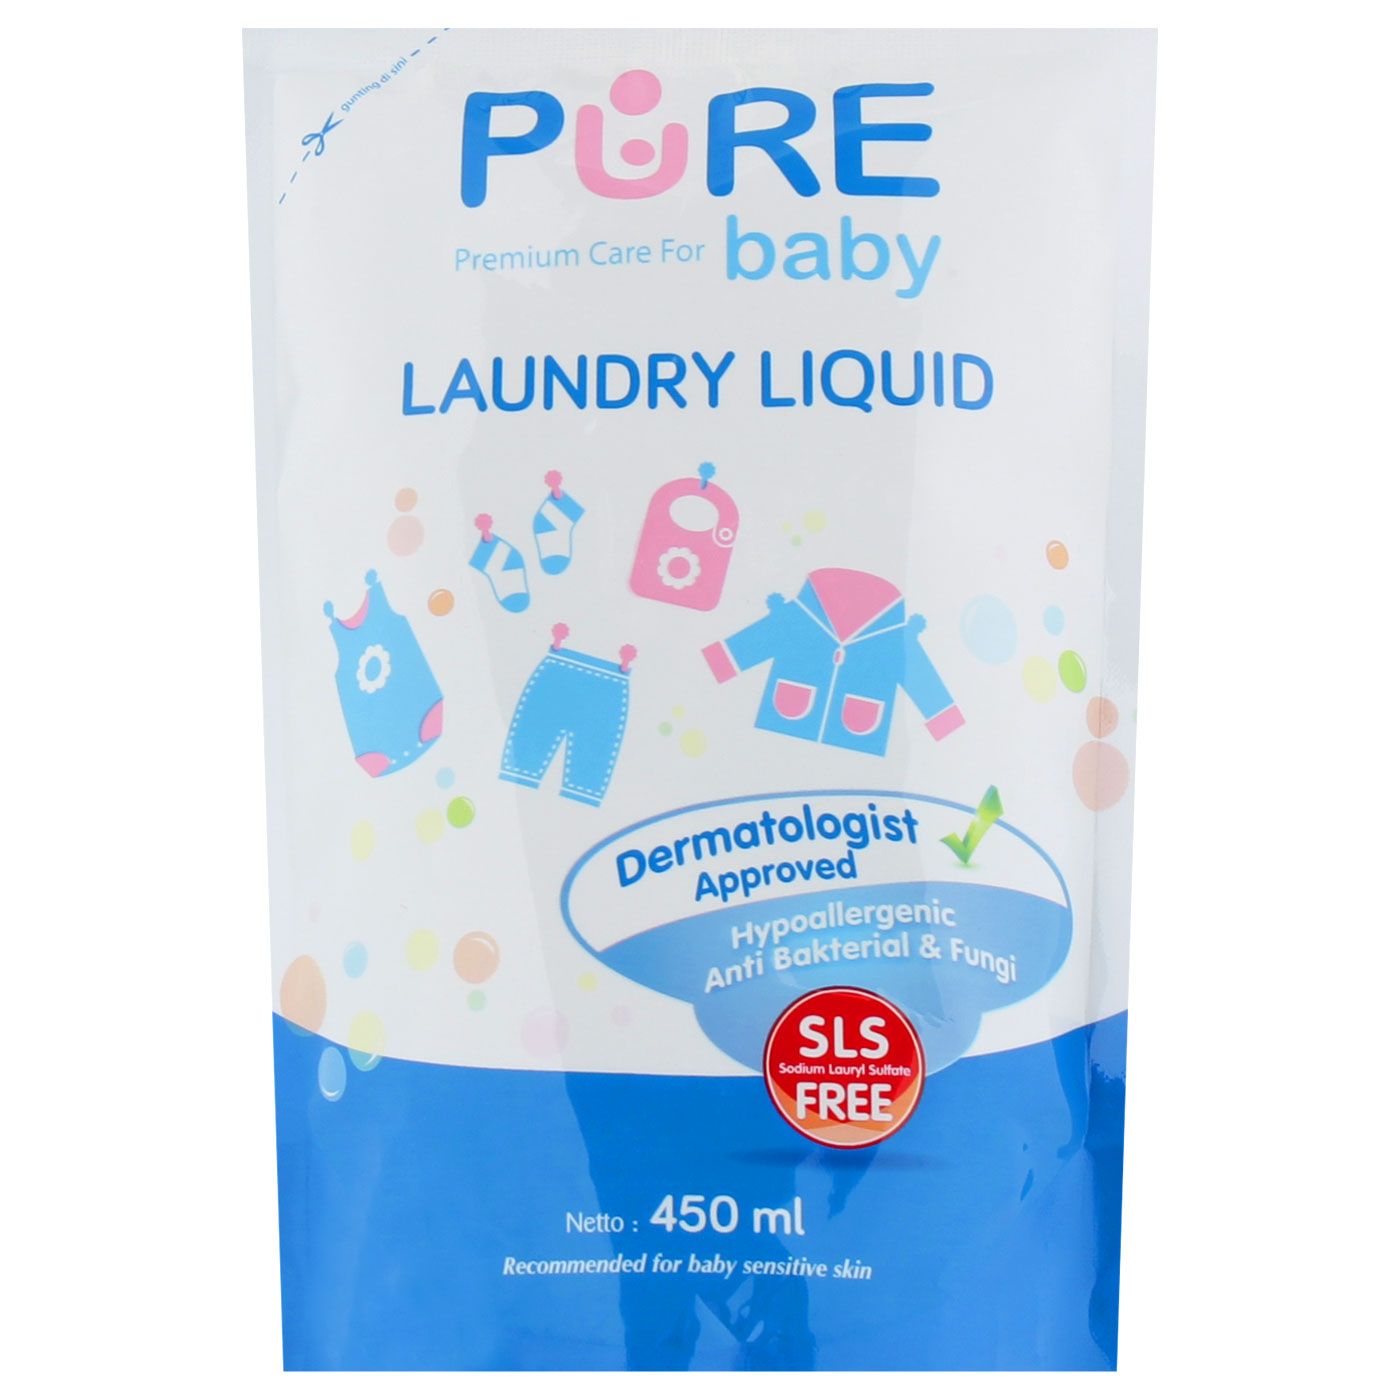 PUREBB Laundry Liquid Refill 450ml - 1